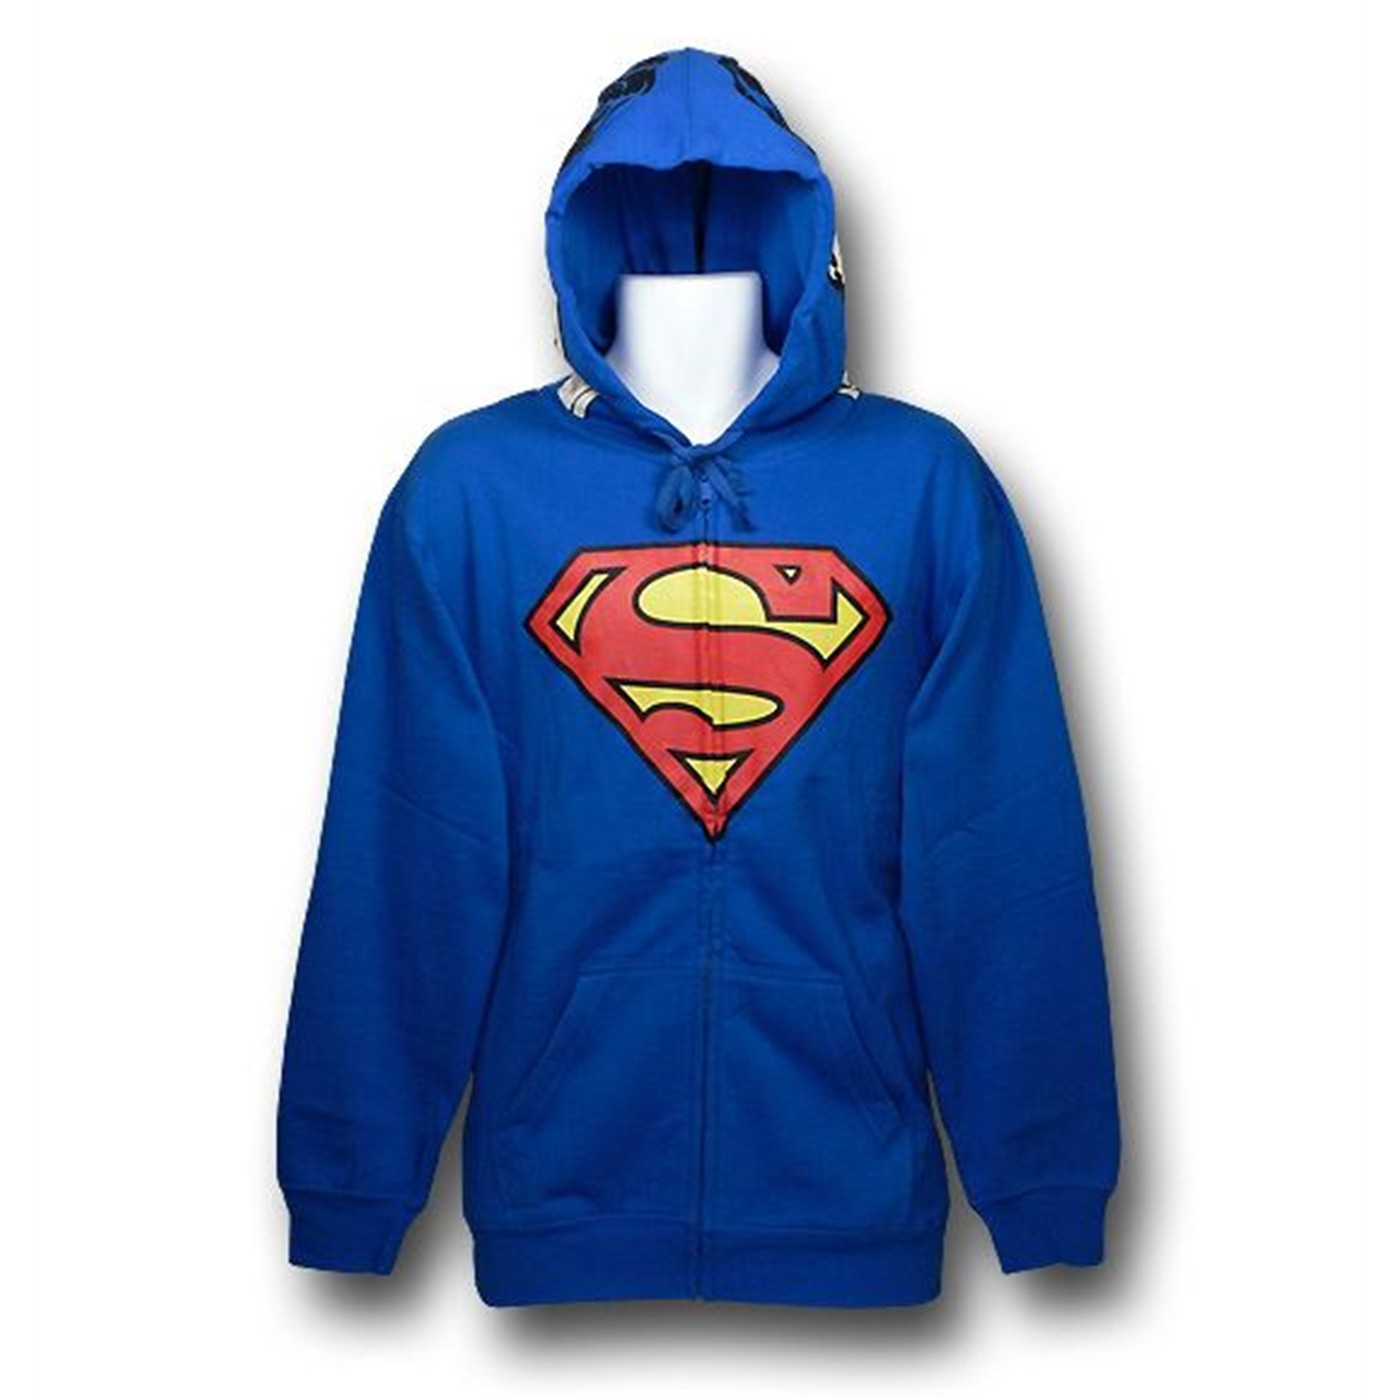 Superman Costume Side Glance Zip-Up Hoodie